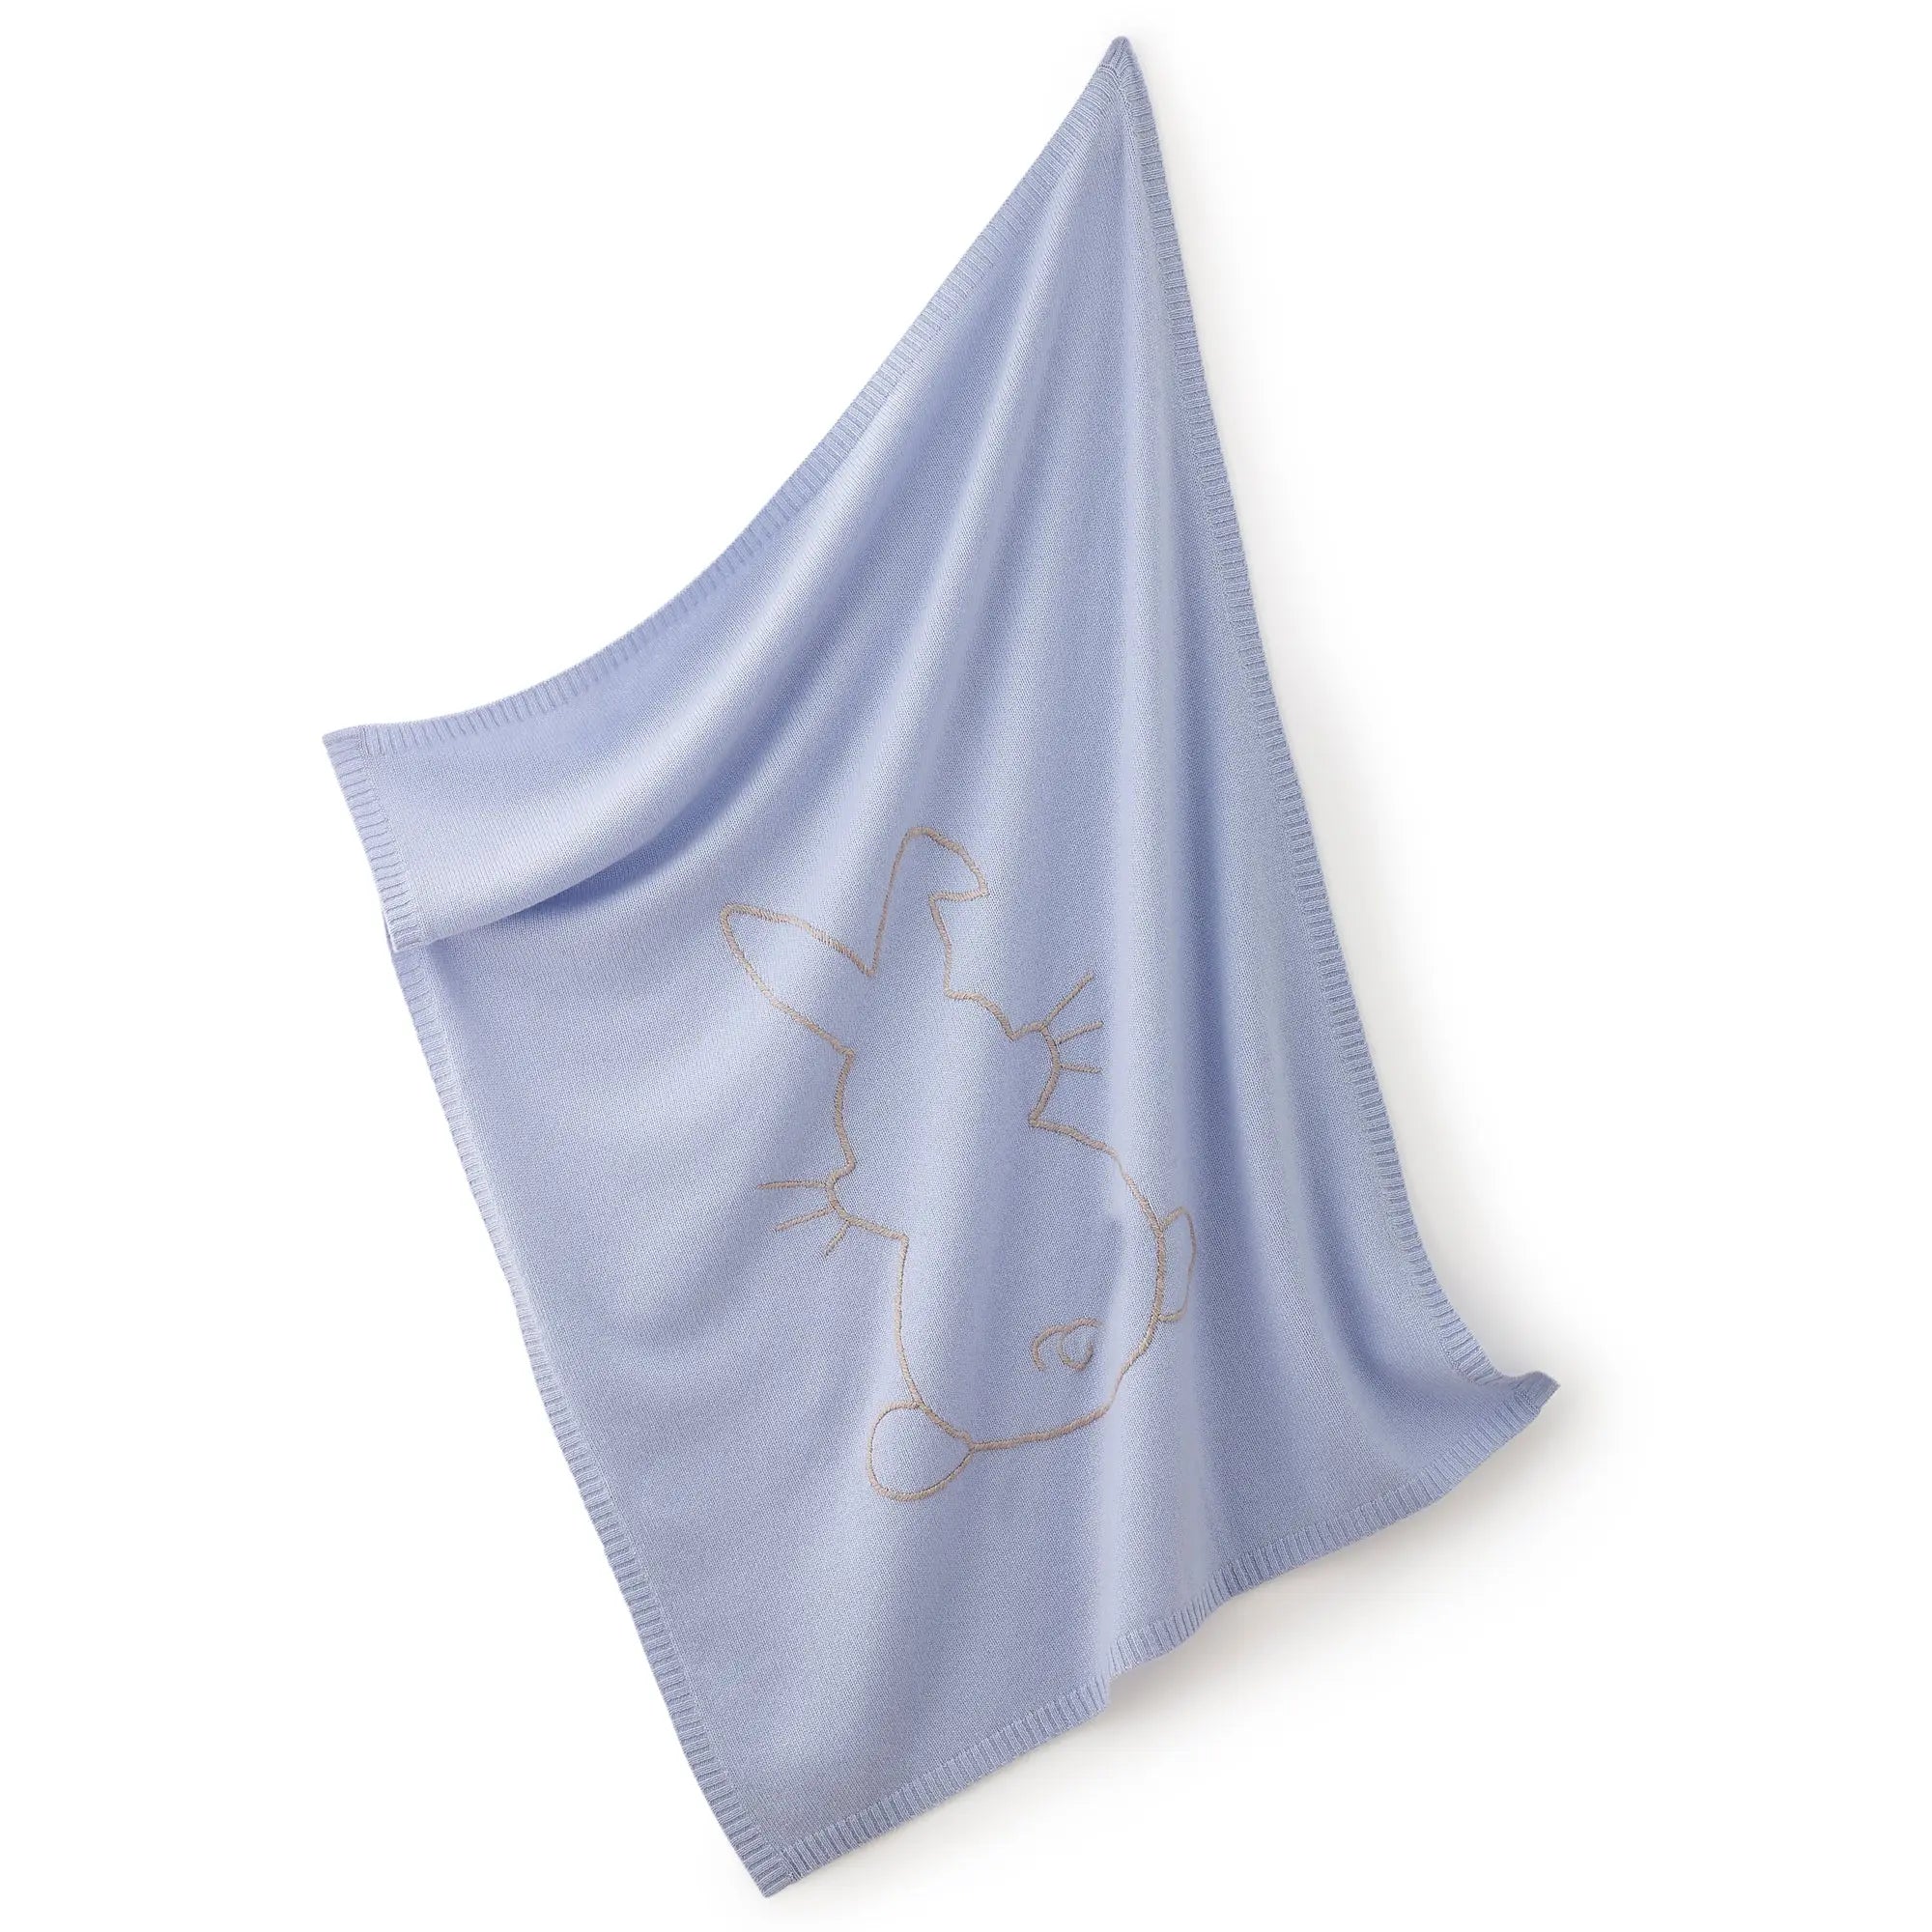 Cashmere bunny embroidered blue blanket-Blankets & swaddling-Ferrari Mariella-Blue Almonds-London-South Kensington